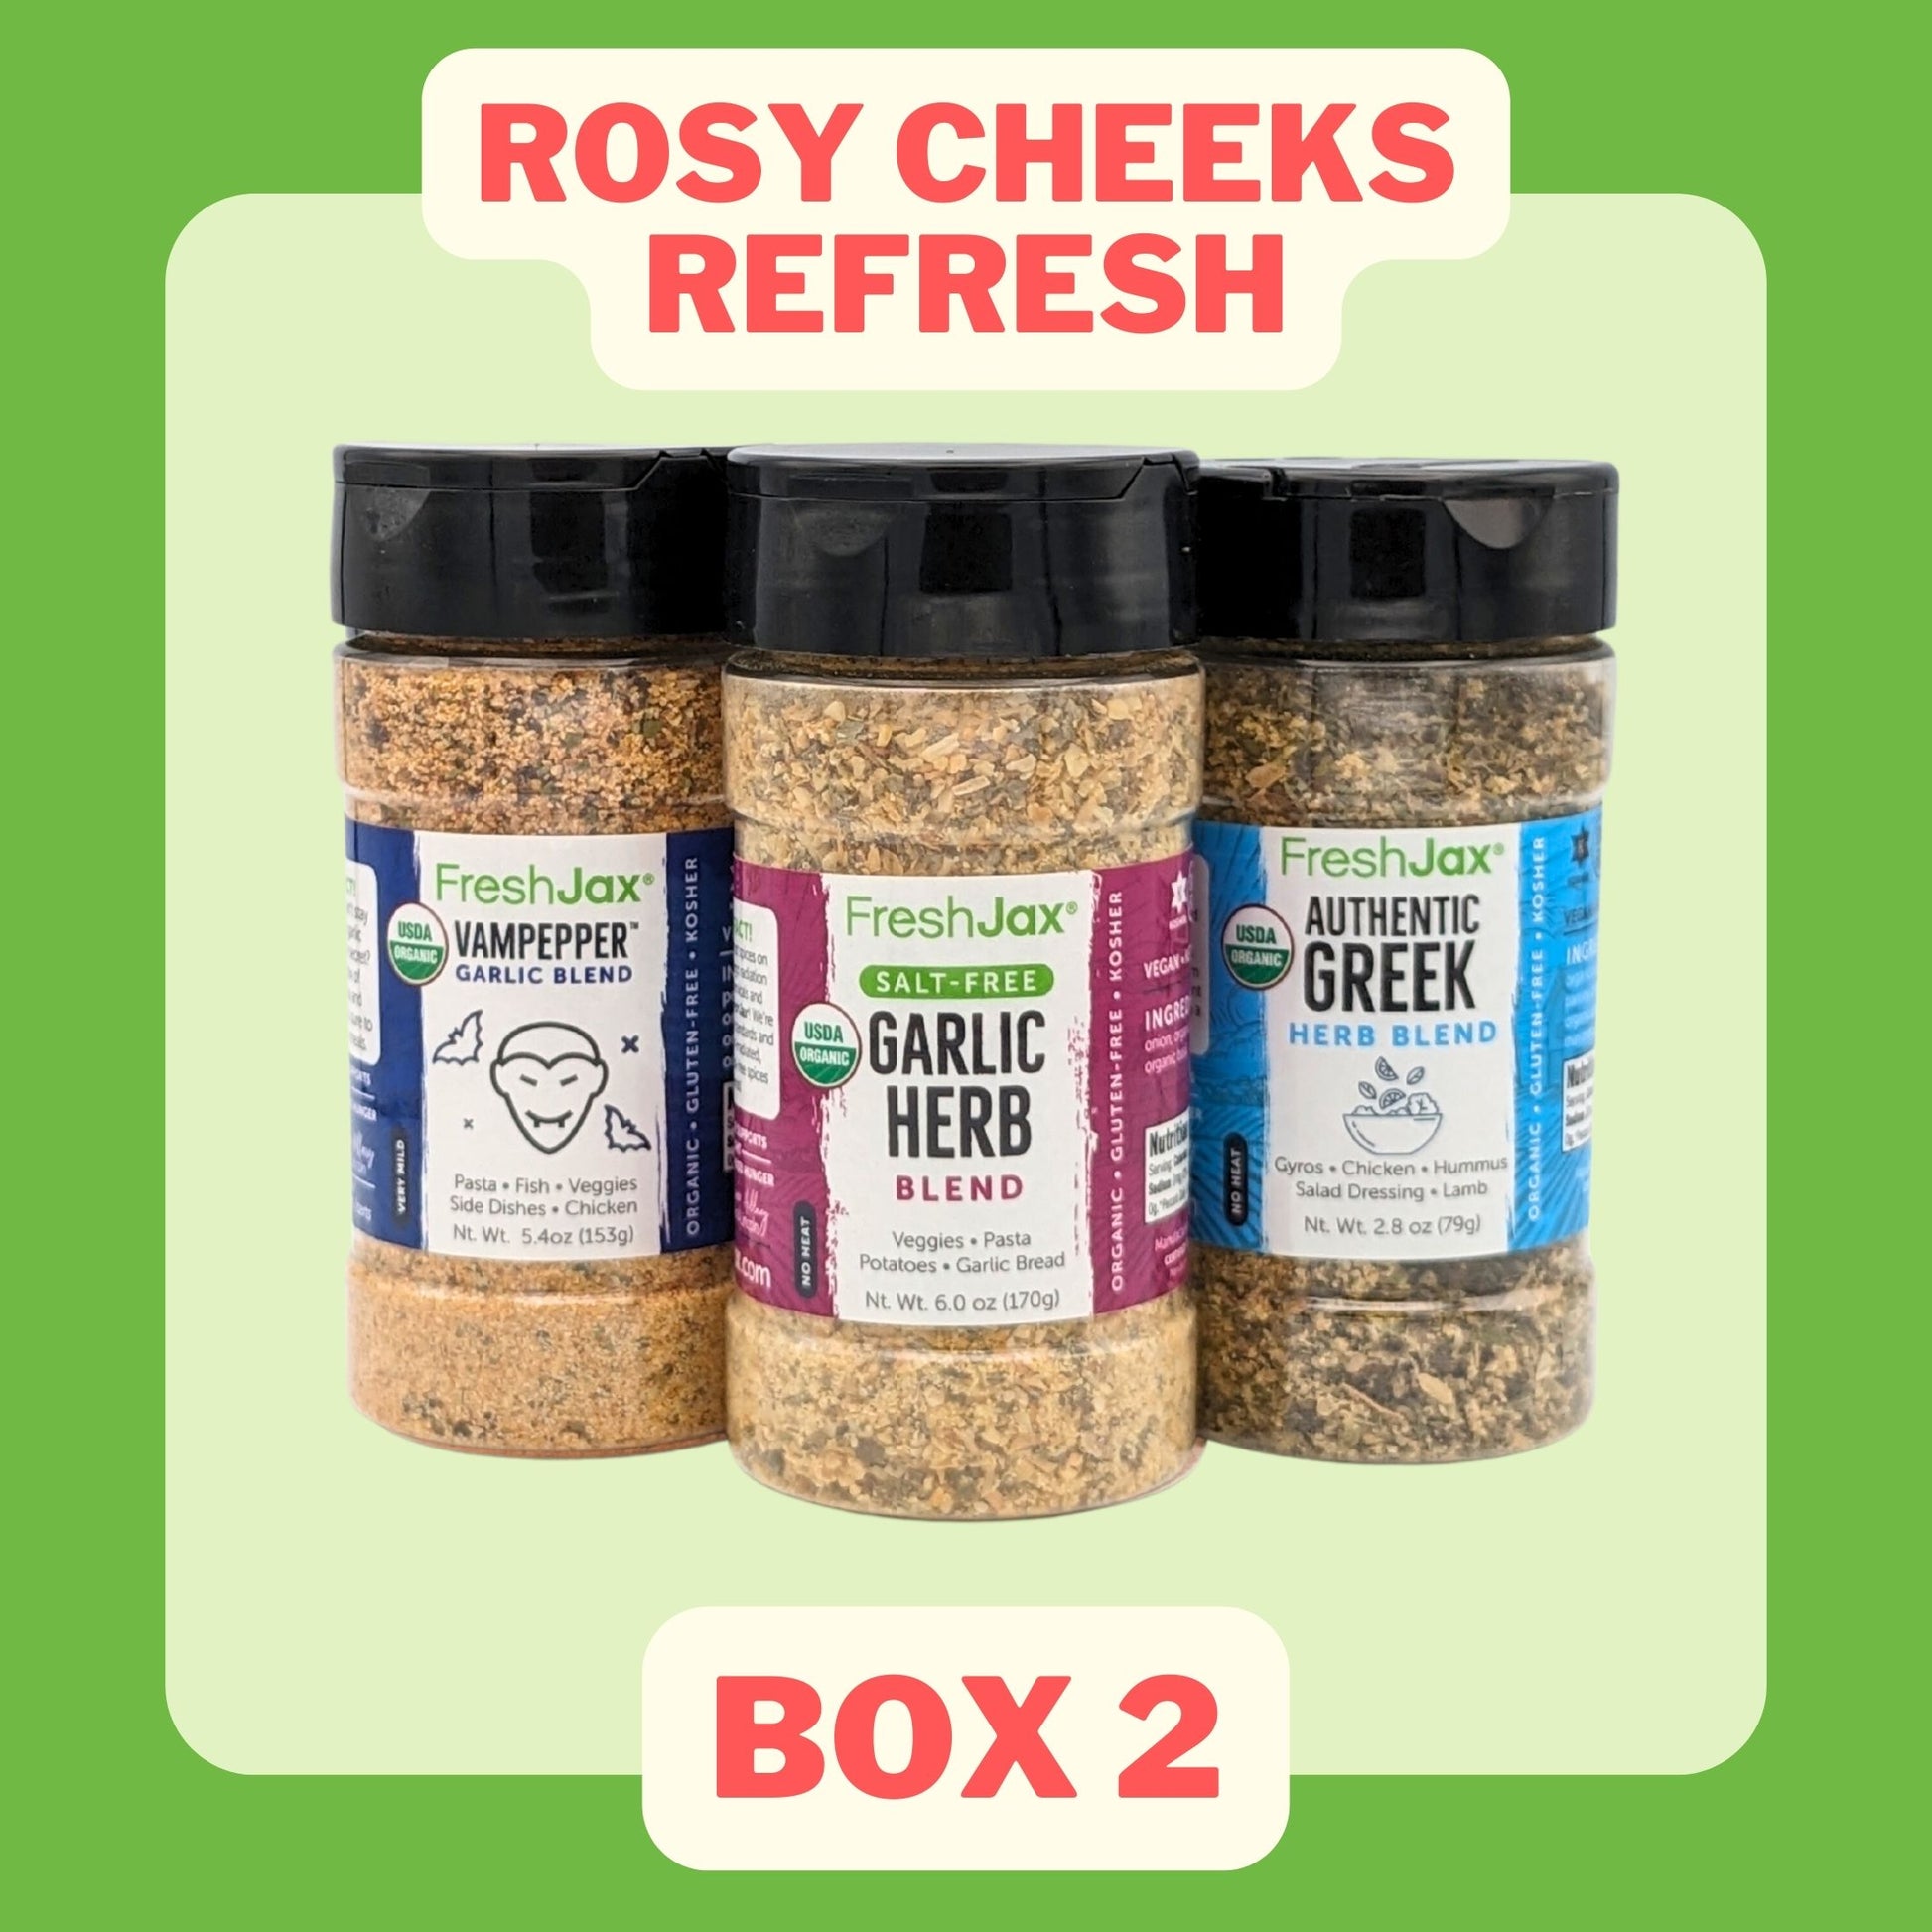 Rosy Cheeks ReFresh Box 2 : Vampepper, Garlic Herb, Greek Seasoning